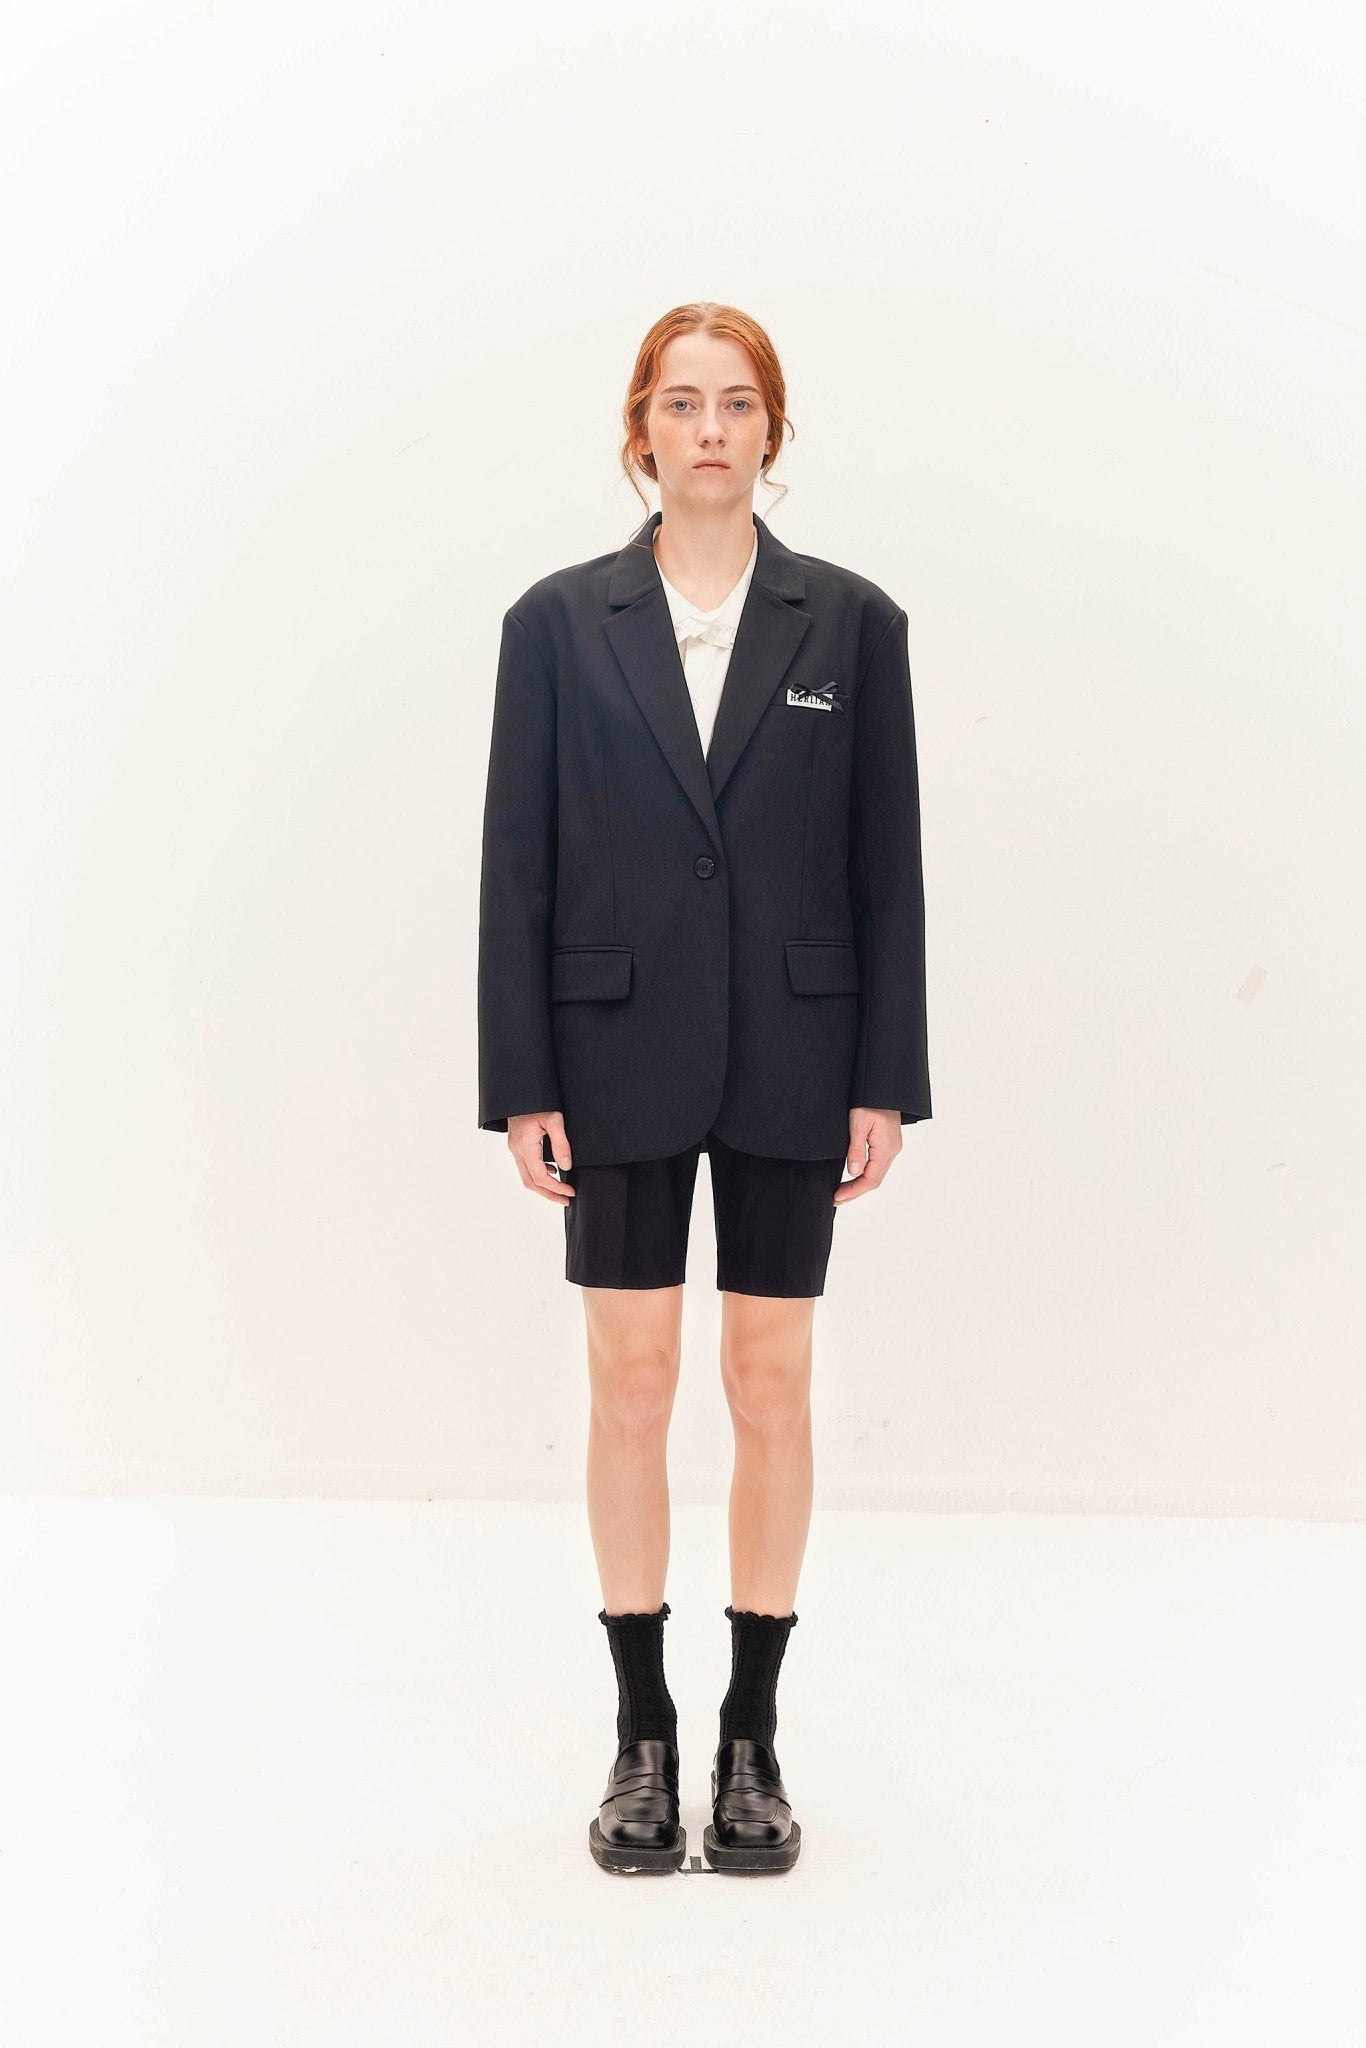 HERLIAN Black Bow-tie Casual Blazer Jacket | MADA IN CHINA